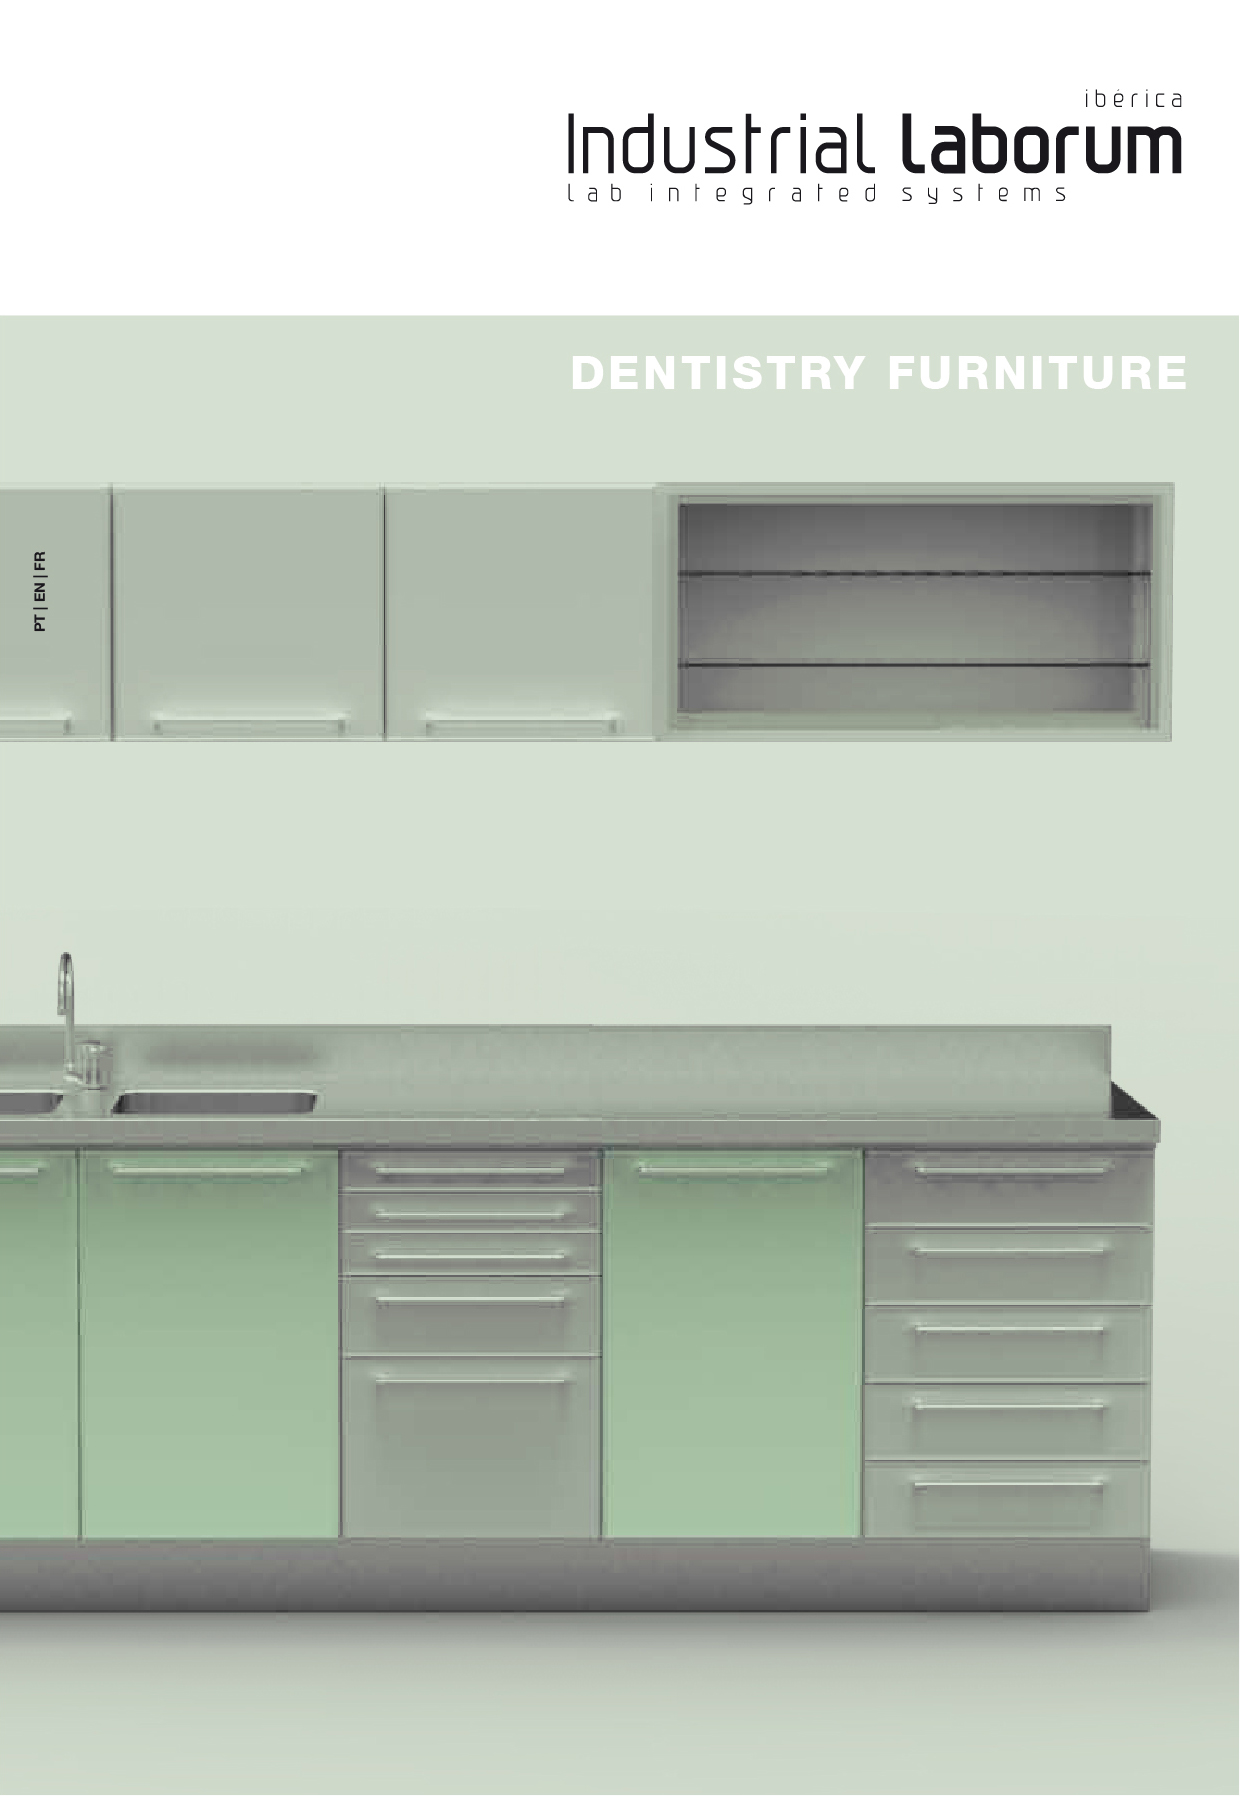 Dental furniture catalog Industrial Laborum Ibérica